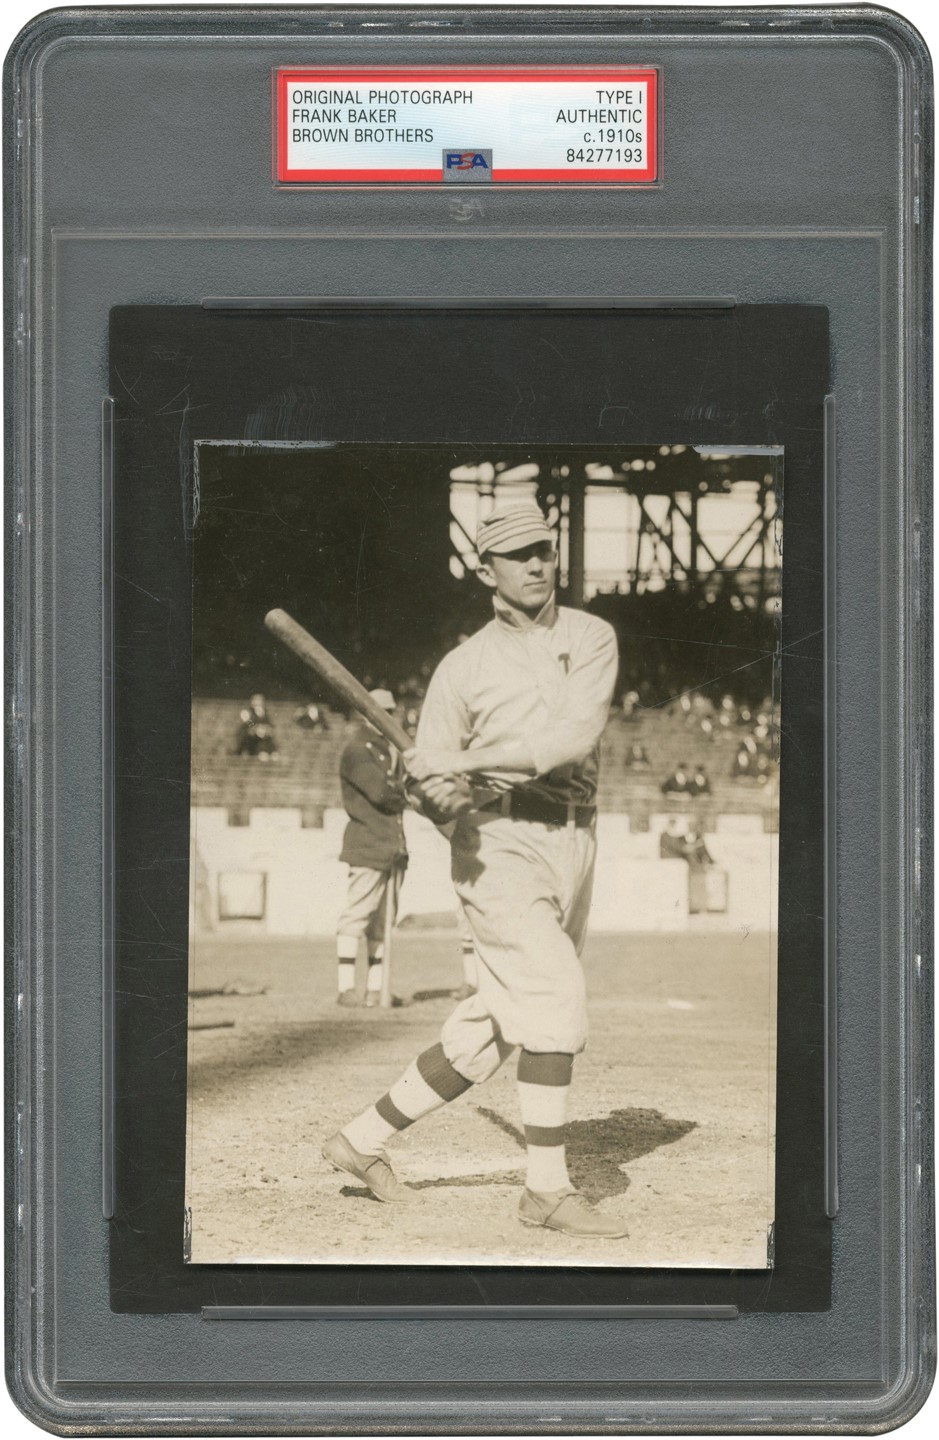 Home Run Baker Batting Photograph (PSA Type I)